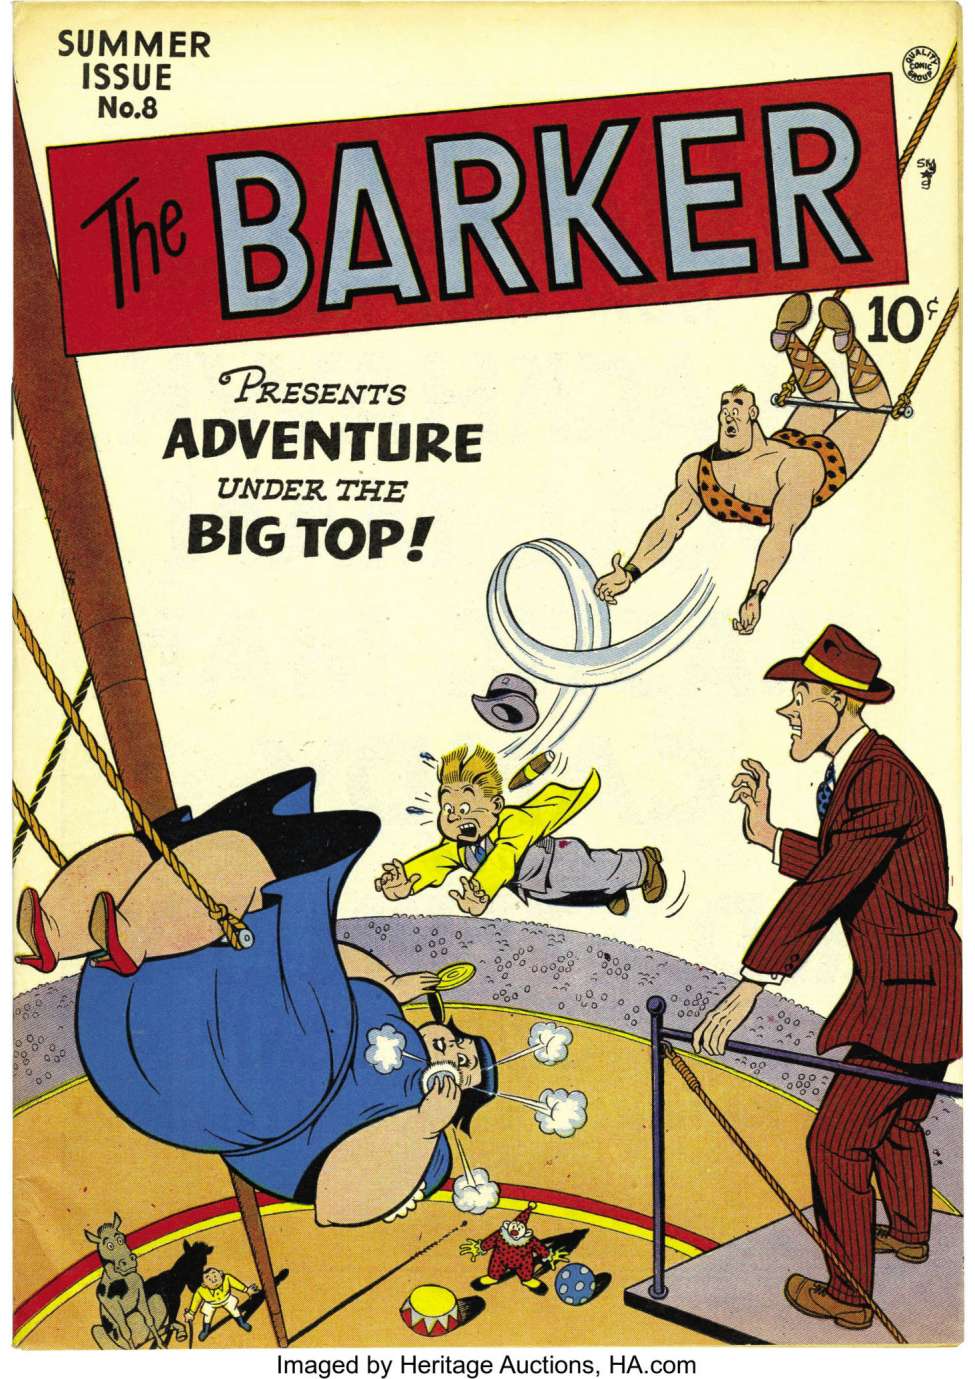 Book Cover For The Barker 8 (alt) - Version 2